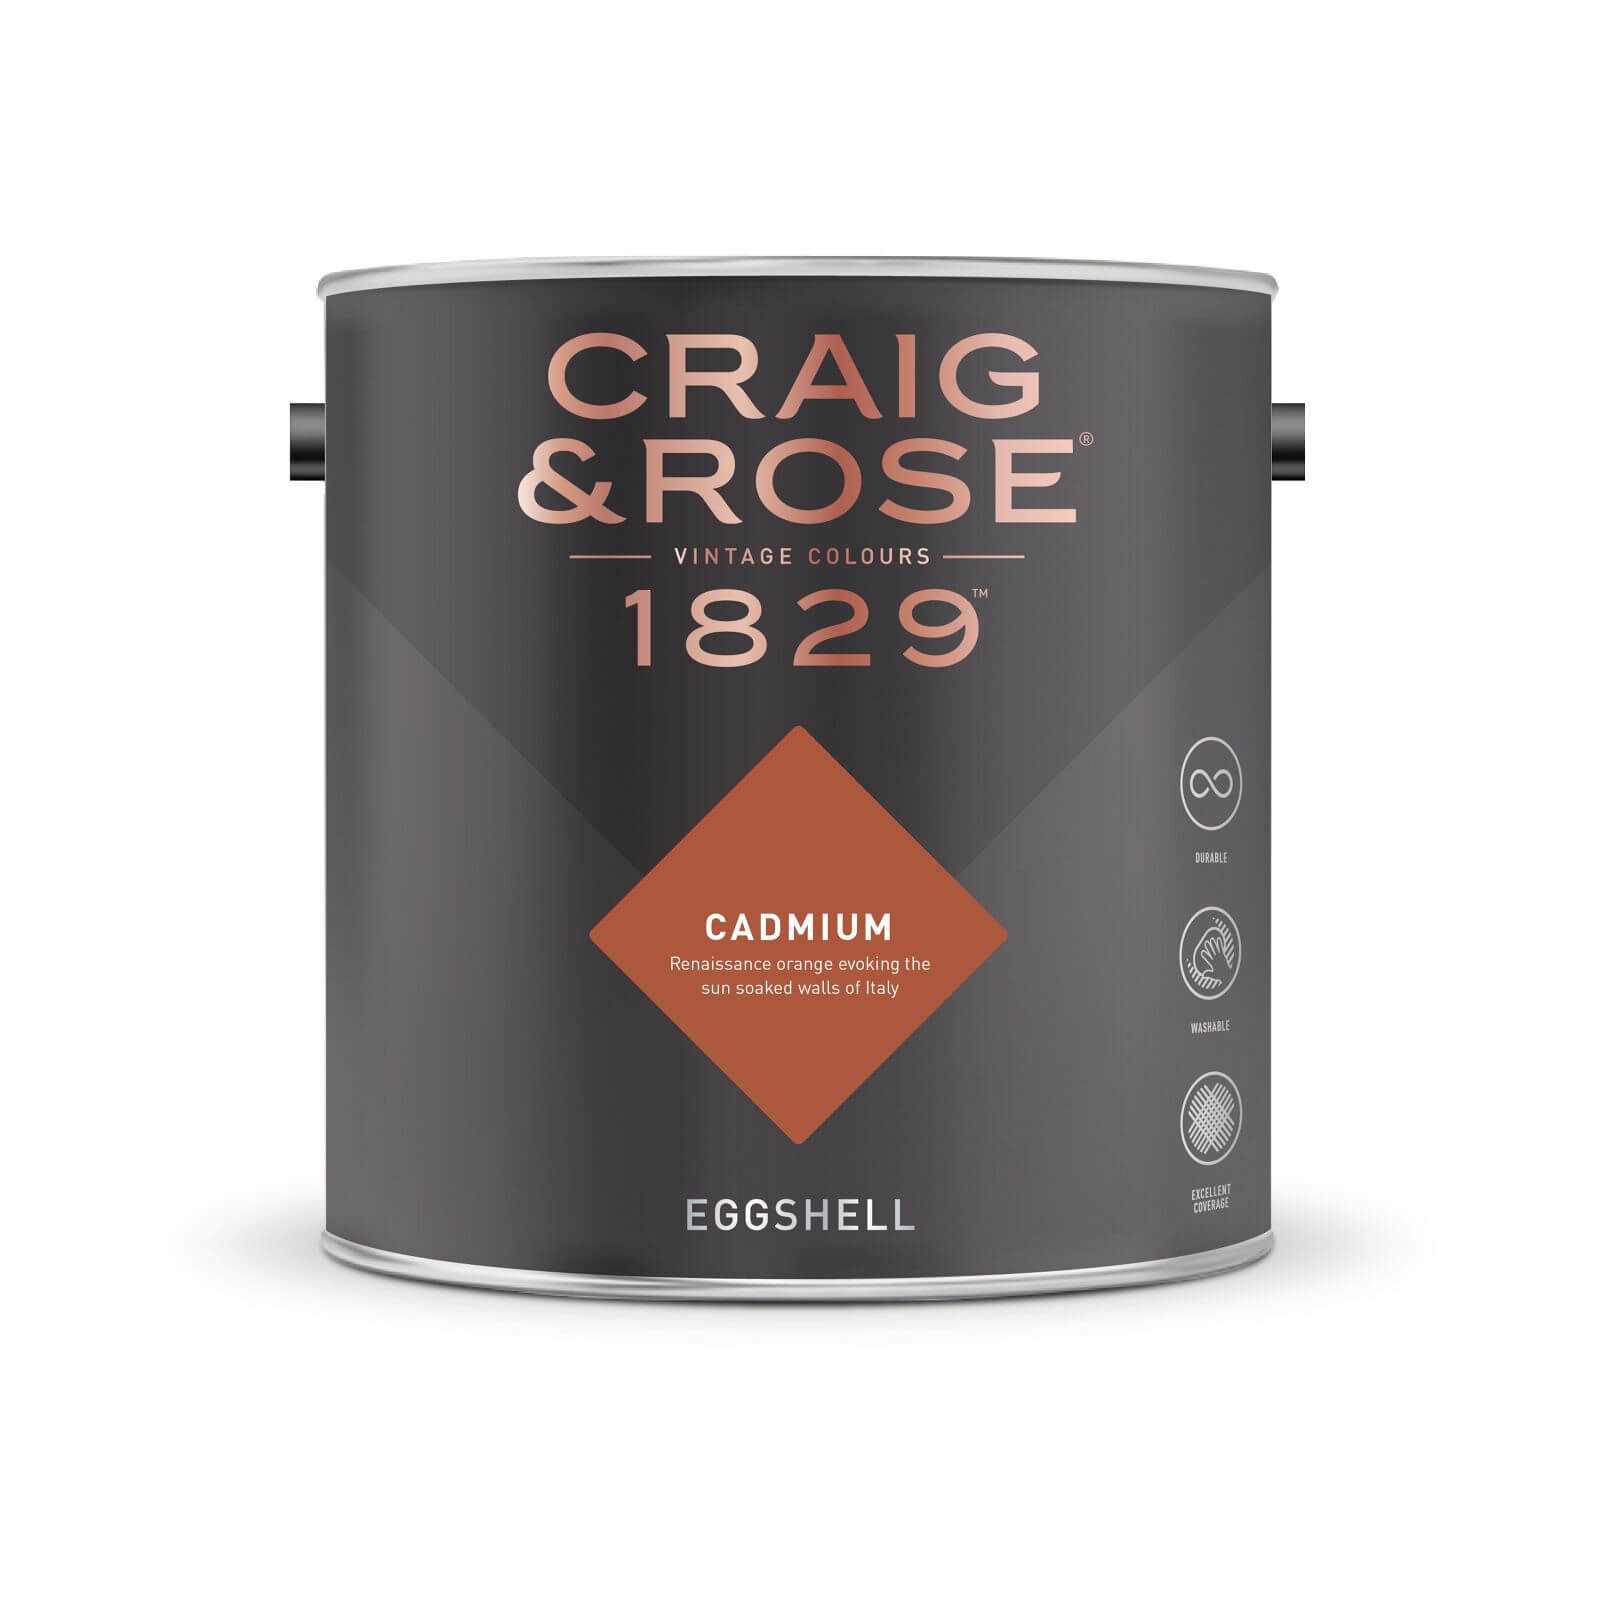 Craig & Rose 1829 Eggshell Paint Cadmium - 2.5L